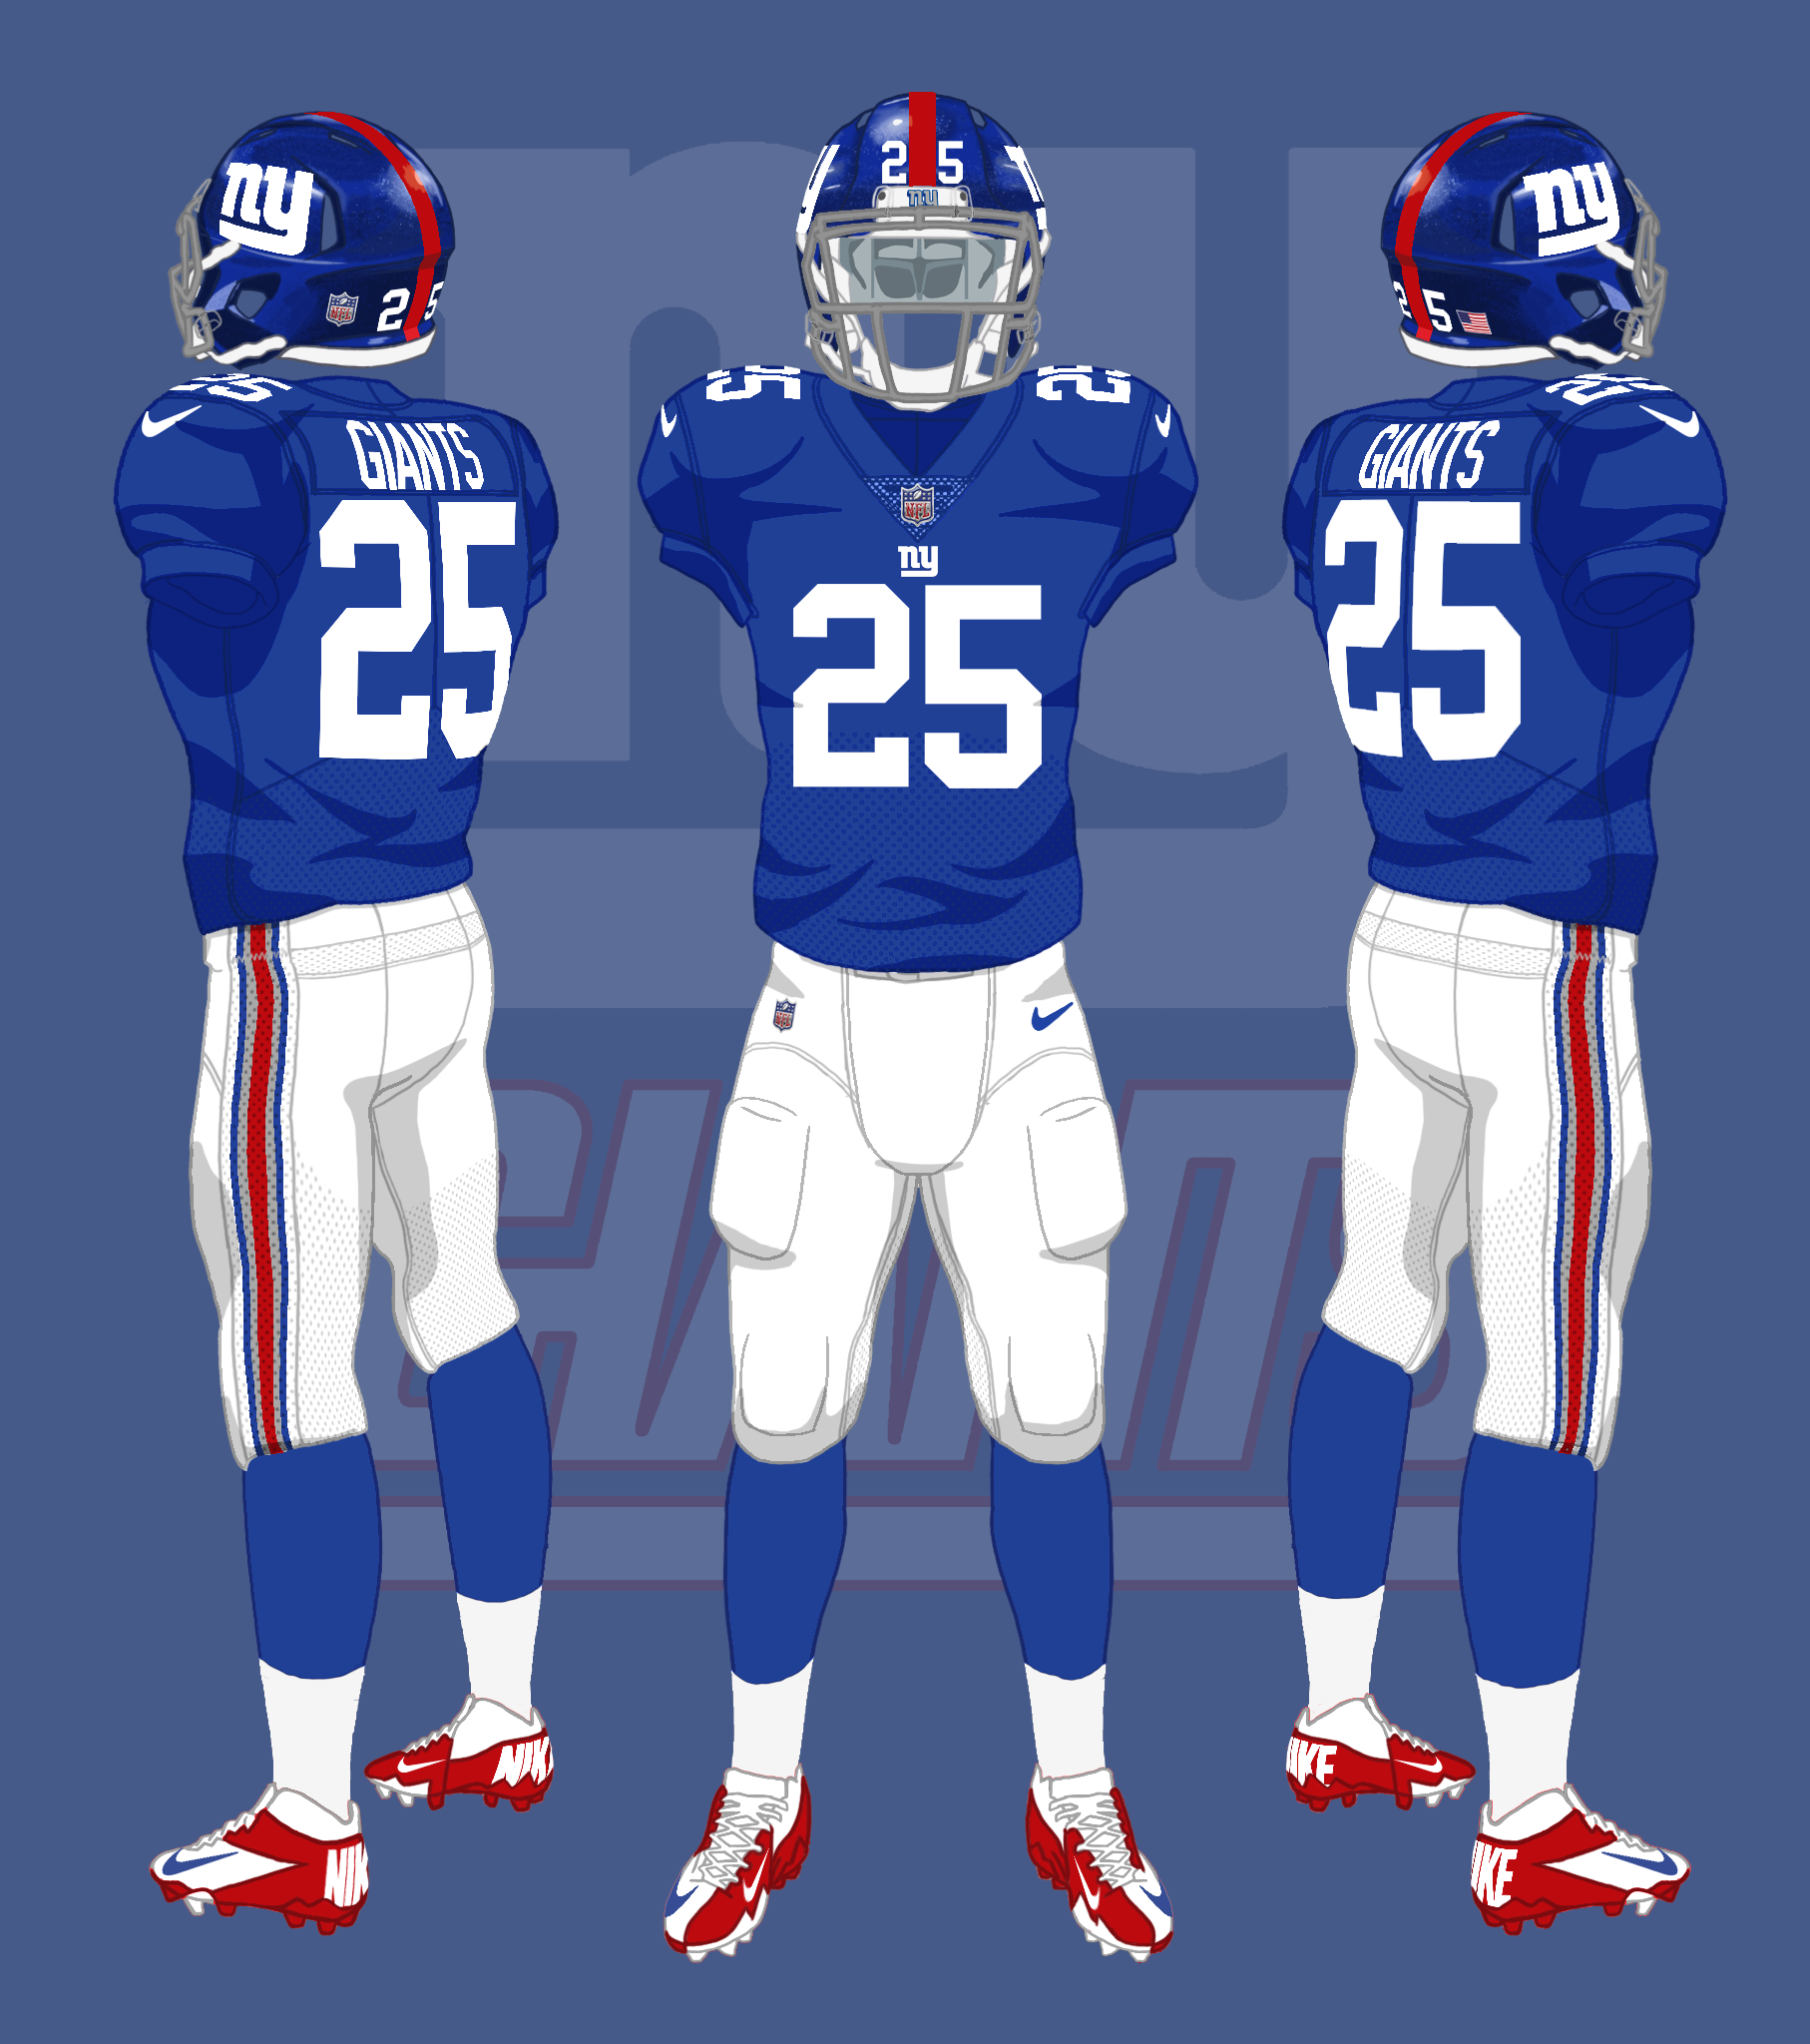 new york giants new uniforms 2020